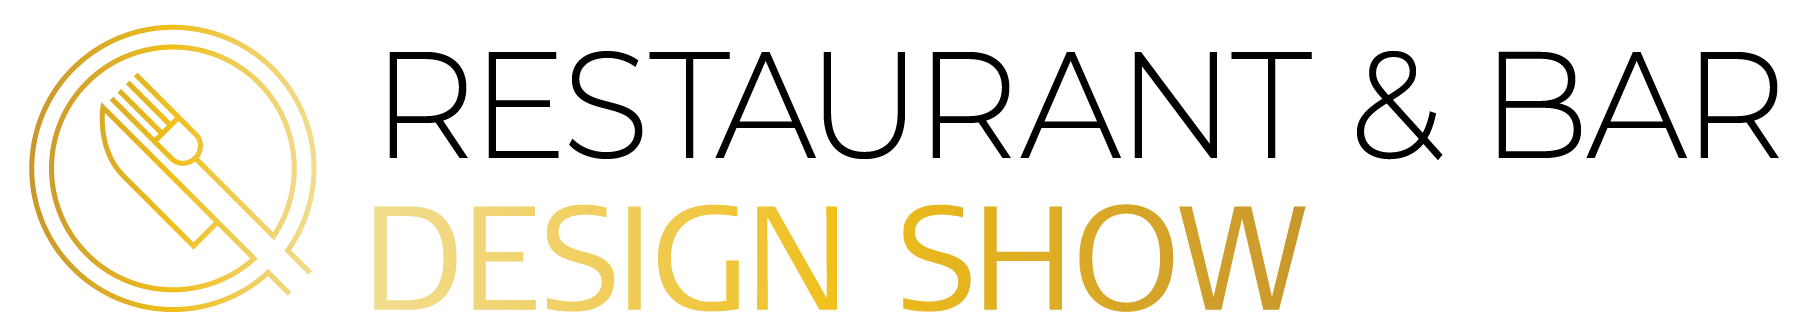 Restaurant & Bar Design Logo